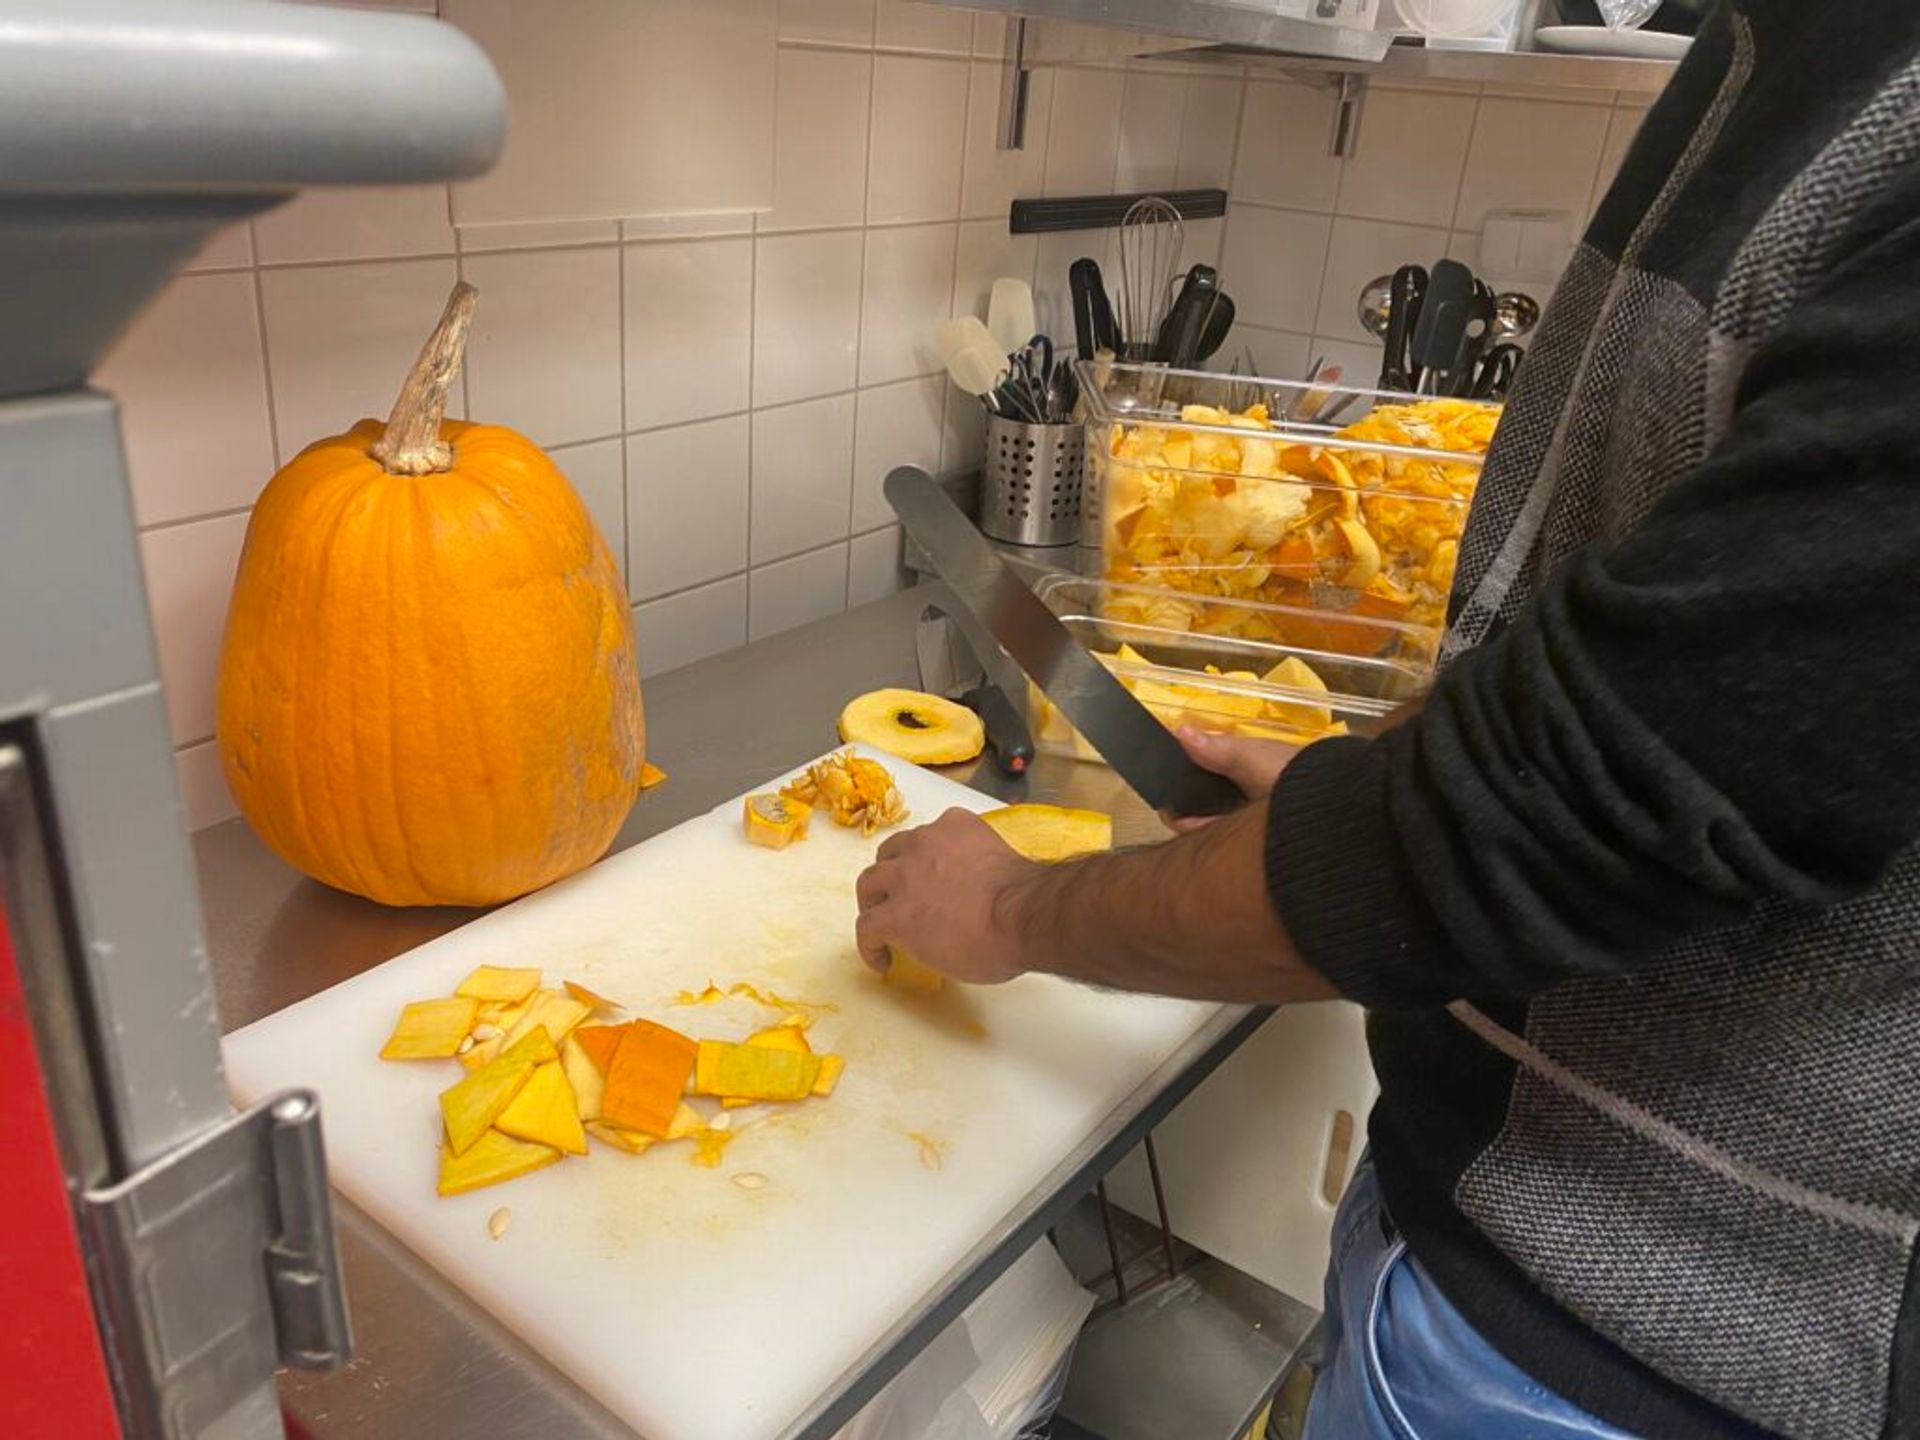 A close-up of a person cutting up pumpkin.